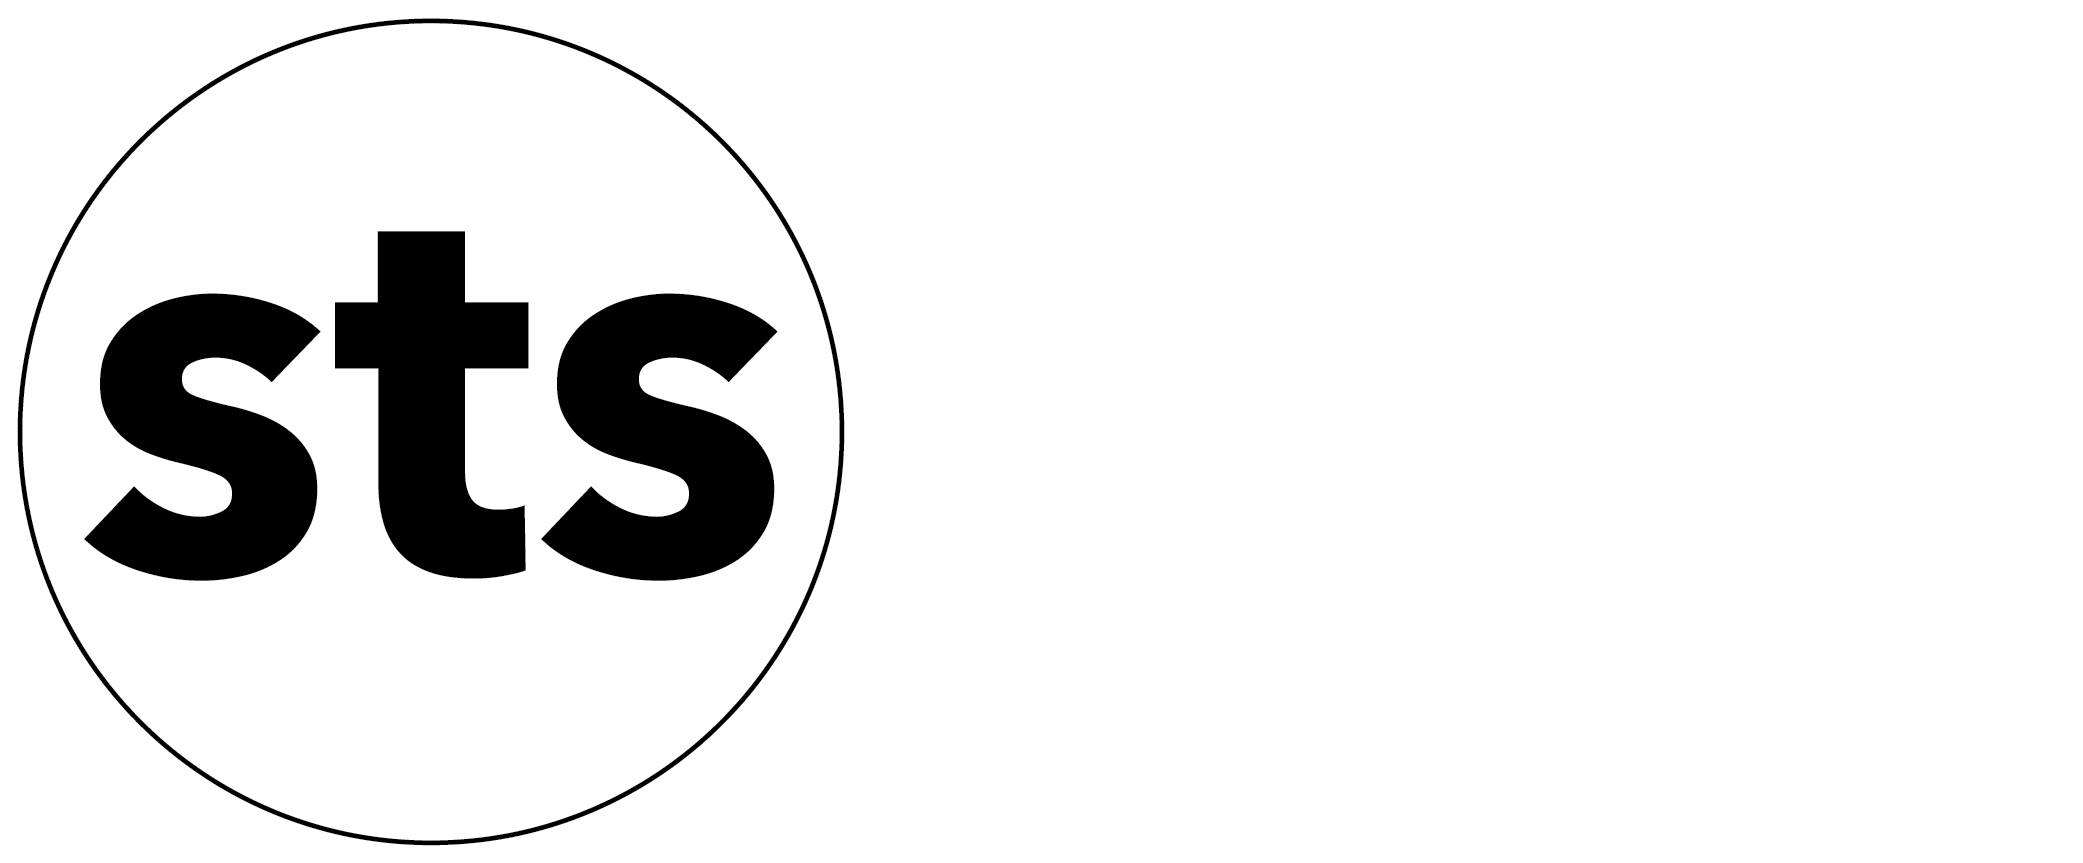 STS 2020 logo